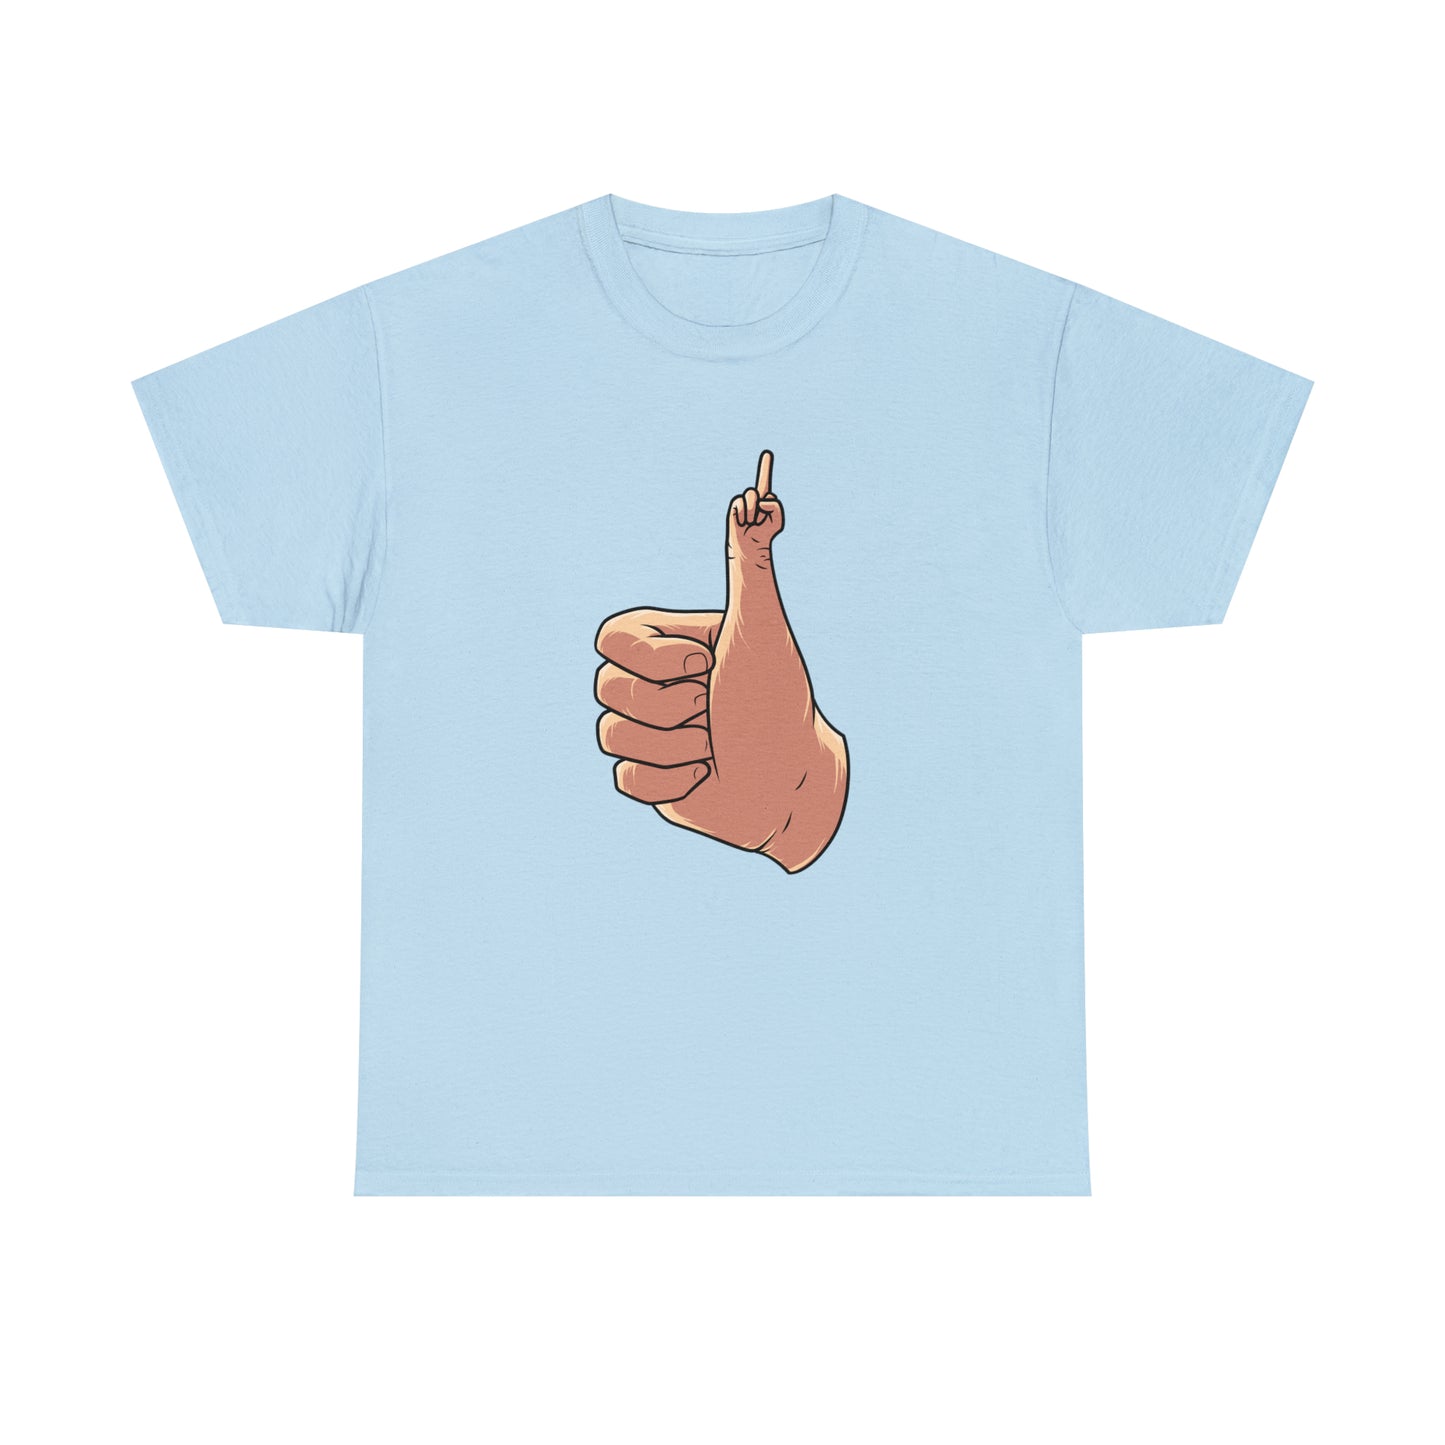 Custom Parody T-shirt, Thumbs up design